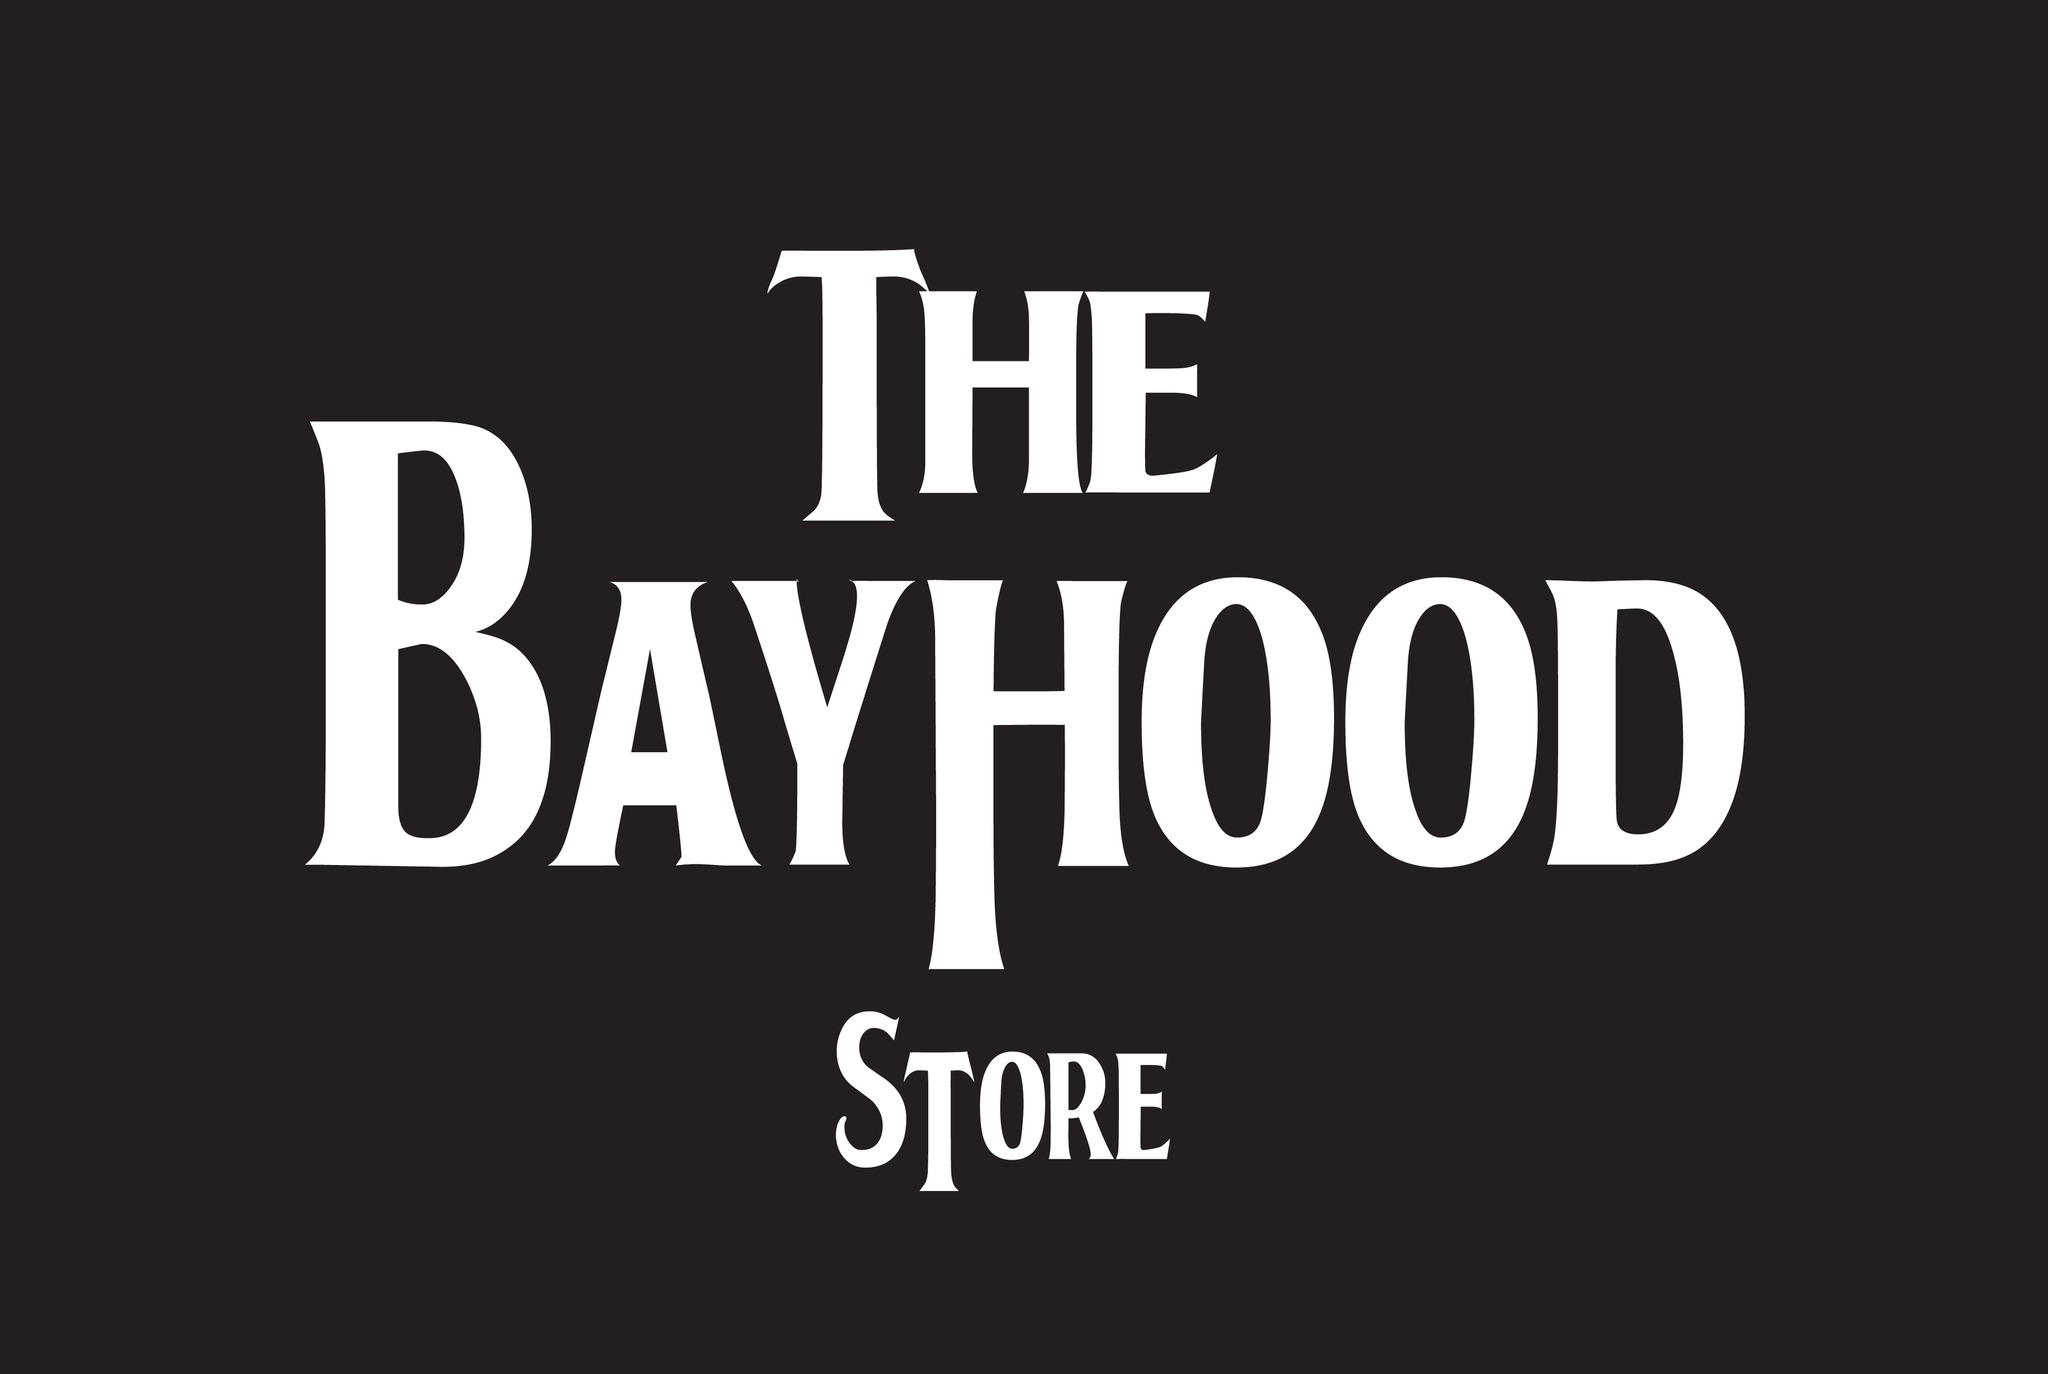 THE BAYHOOD Store